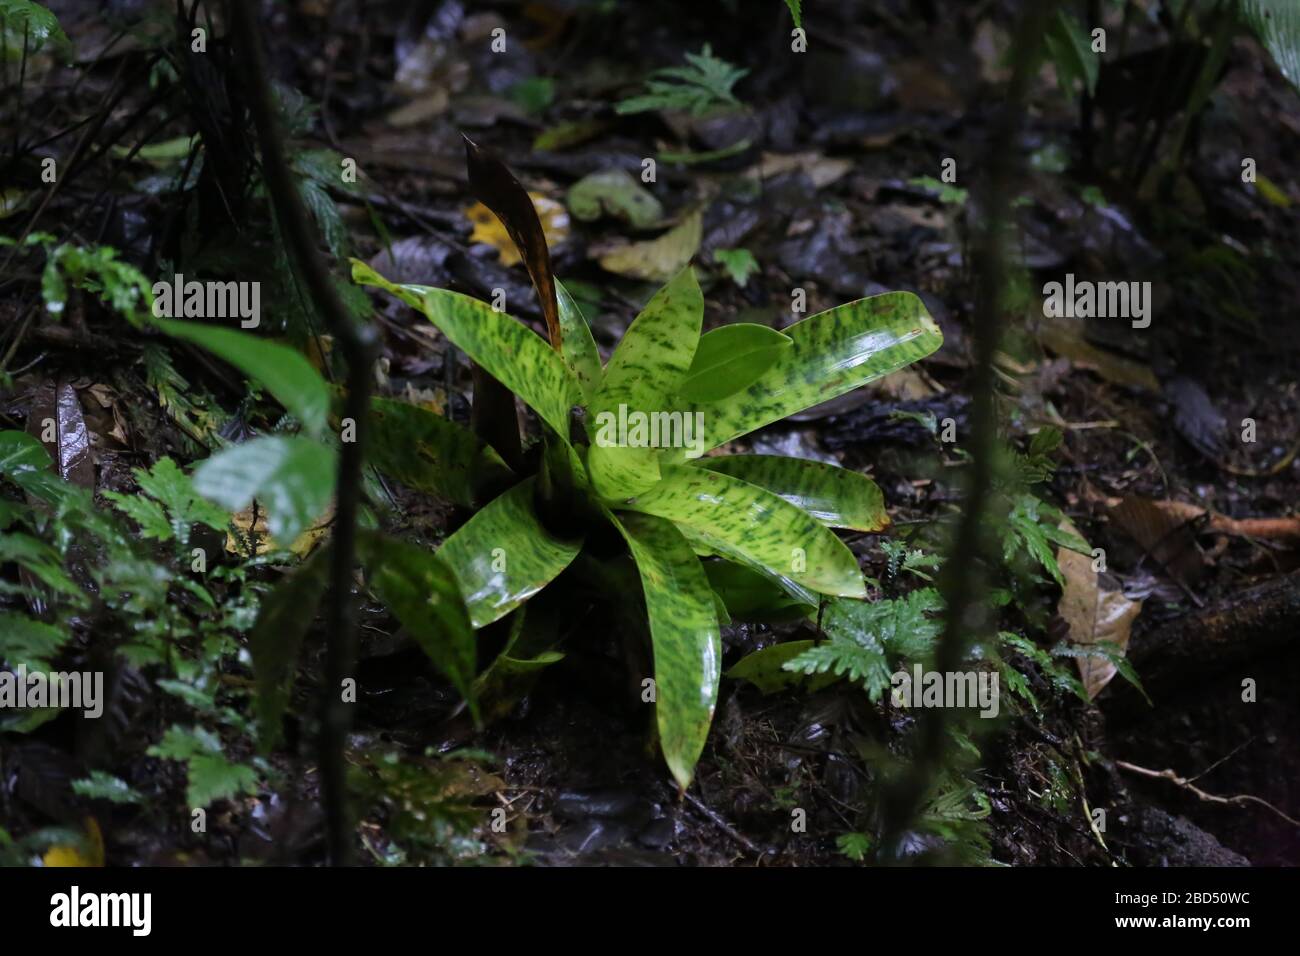 Bromeliads Plant, Monteverde Forest, Costa Rica Stock Photo